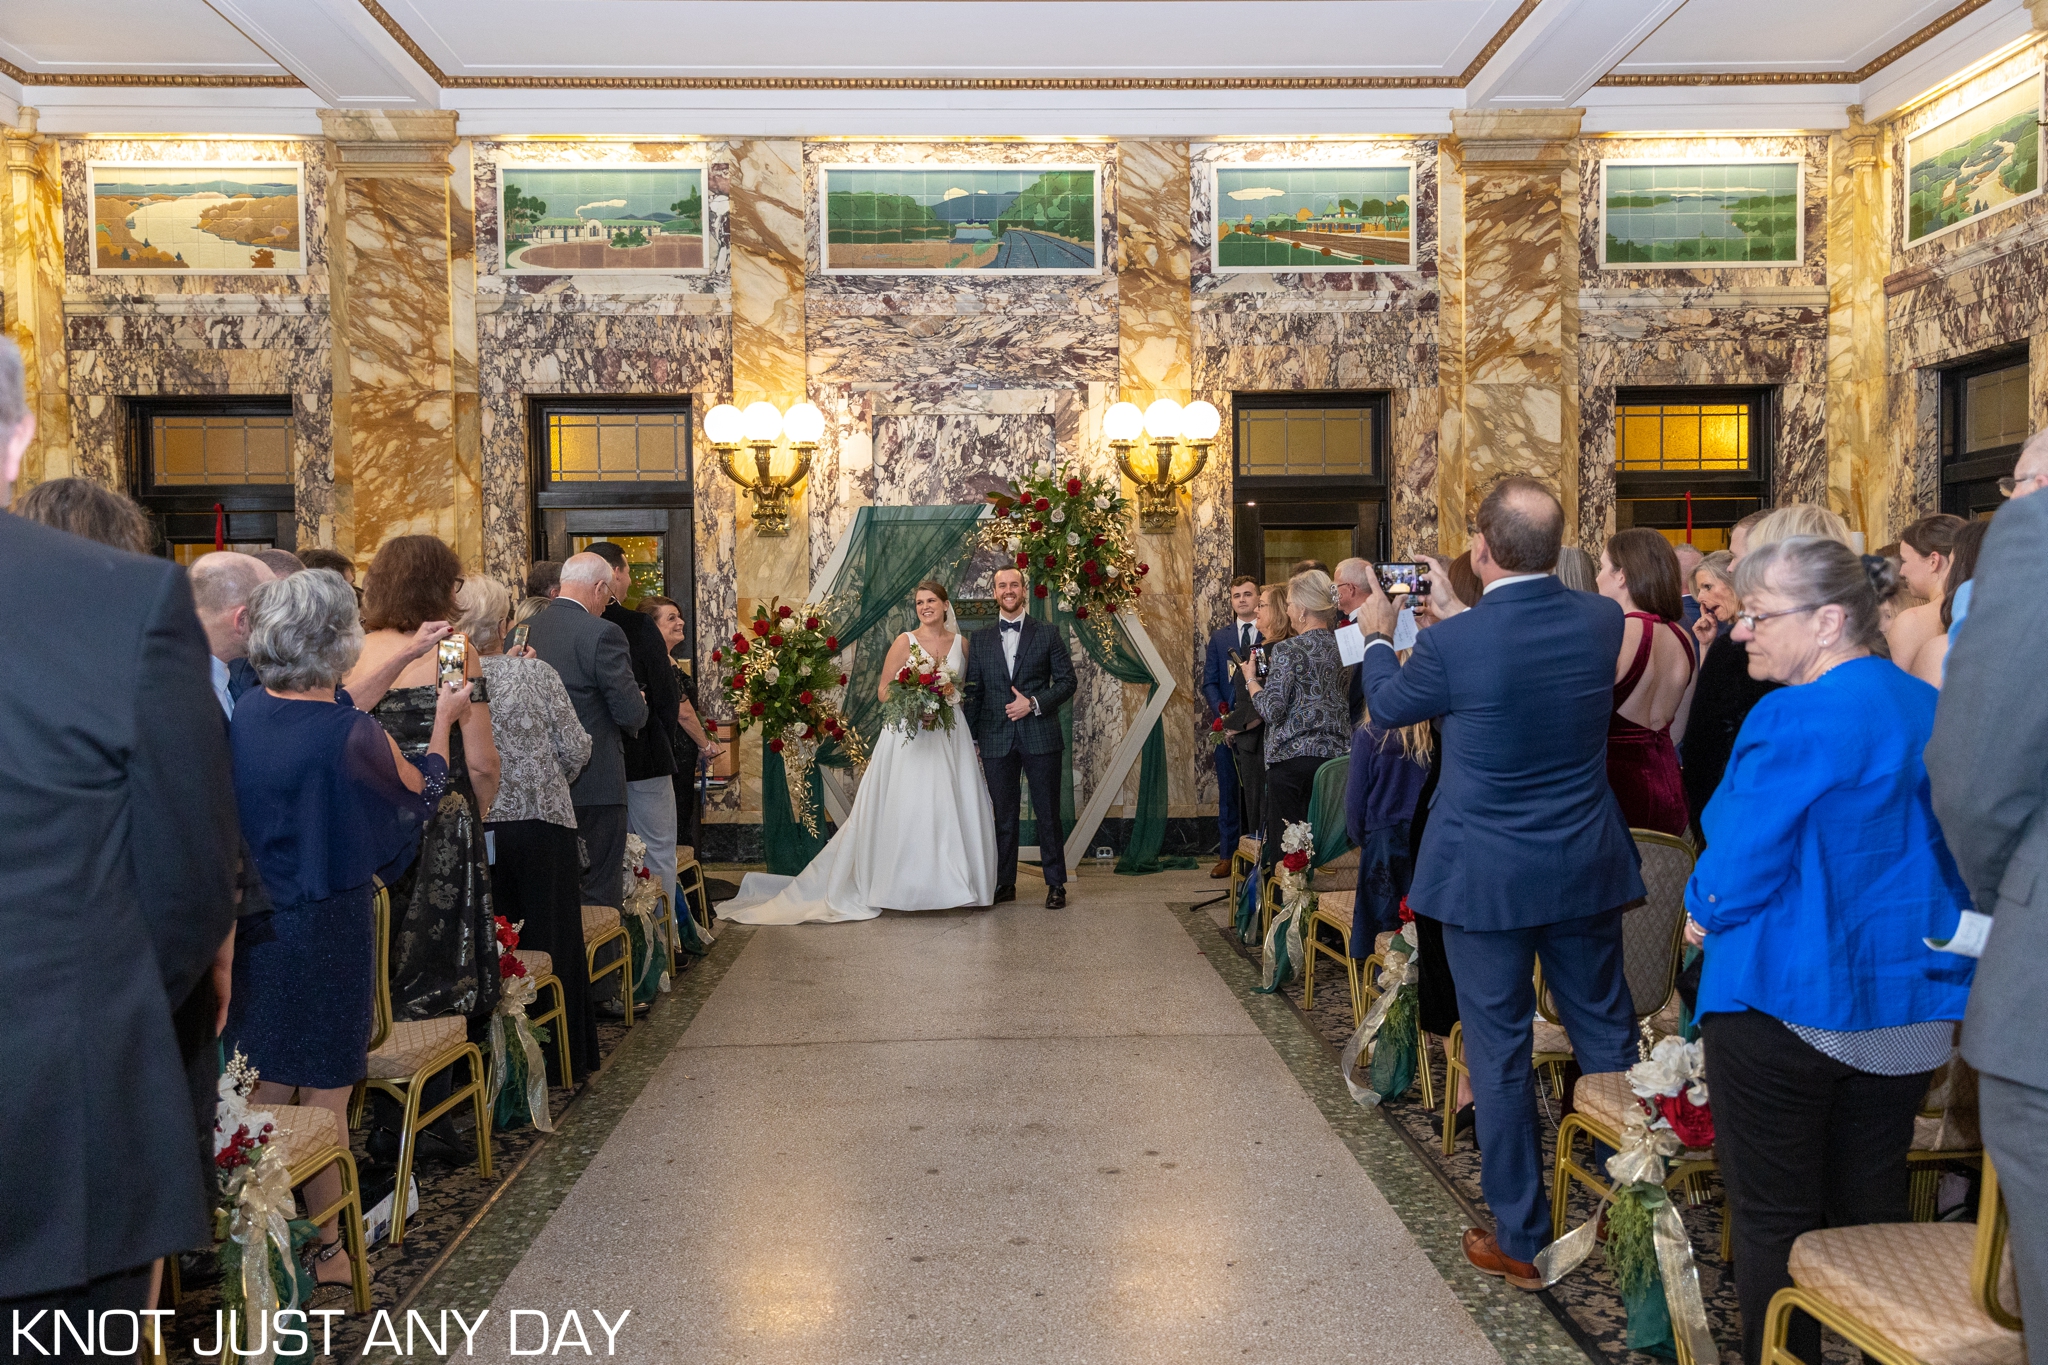 wedding ceremony at the Radisson Lackawanna Station Hotel in Scranton, Pa 